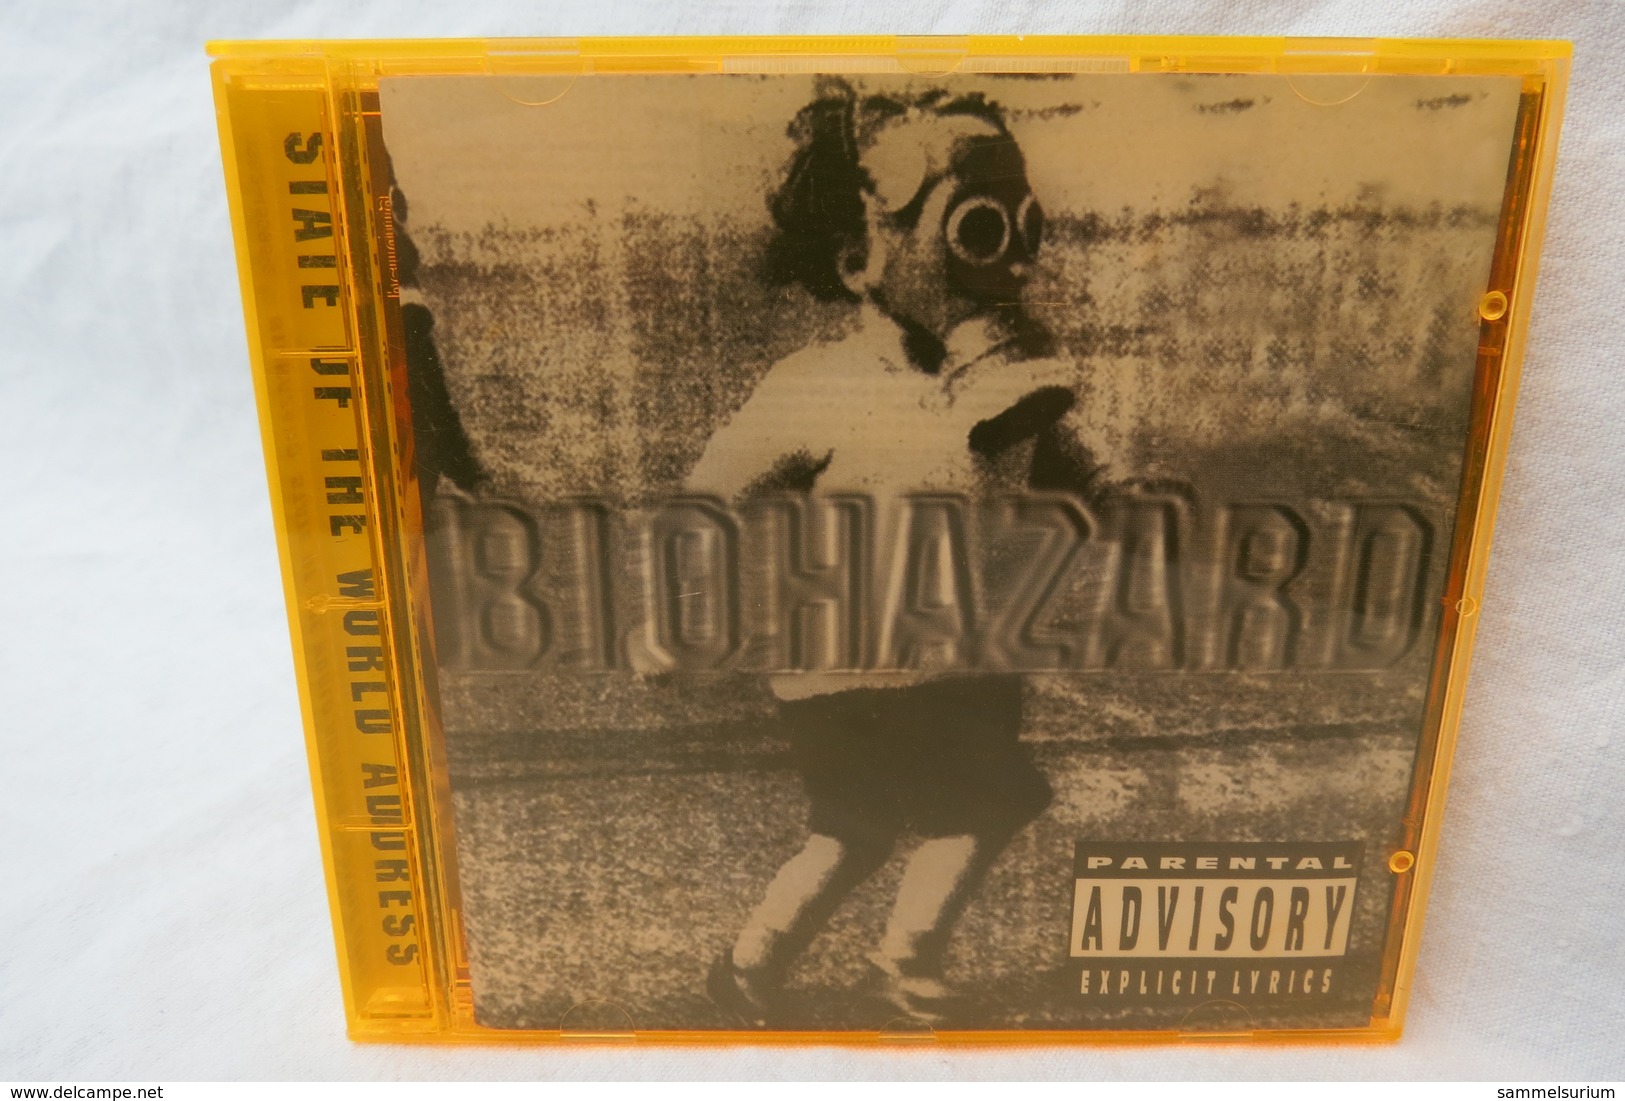 CD "Biohazard" State Of The World Address (parental Advisory Explicit Lyrics) - Limitierte Auflagen